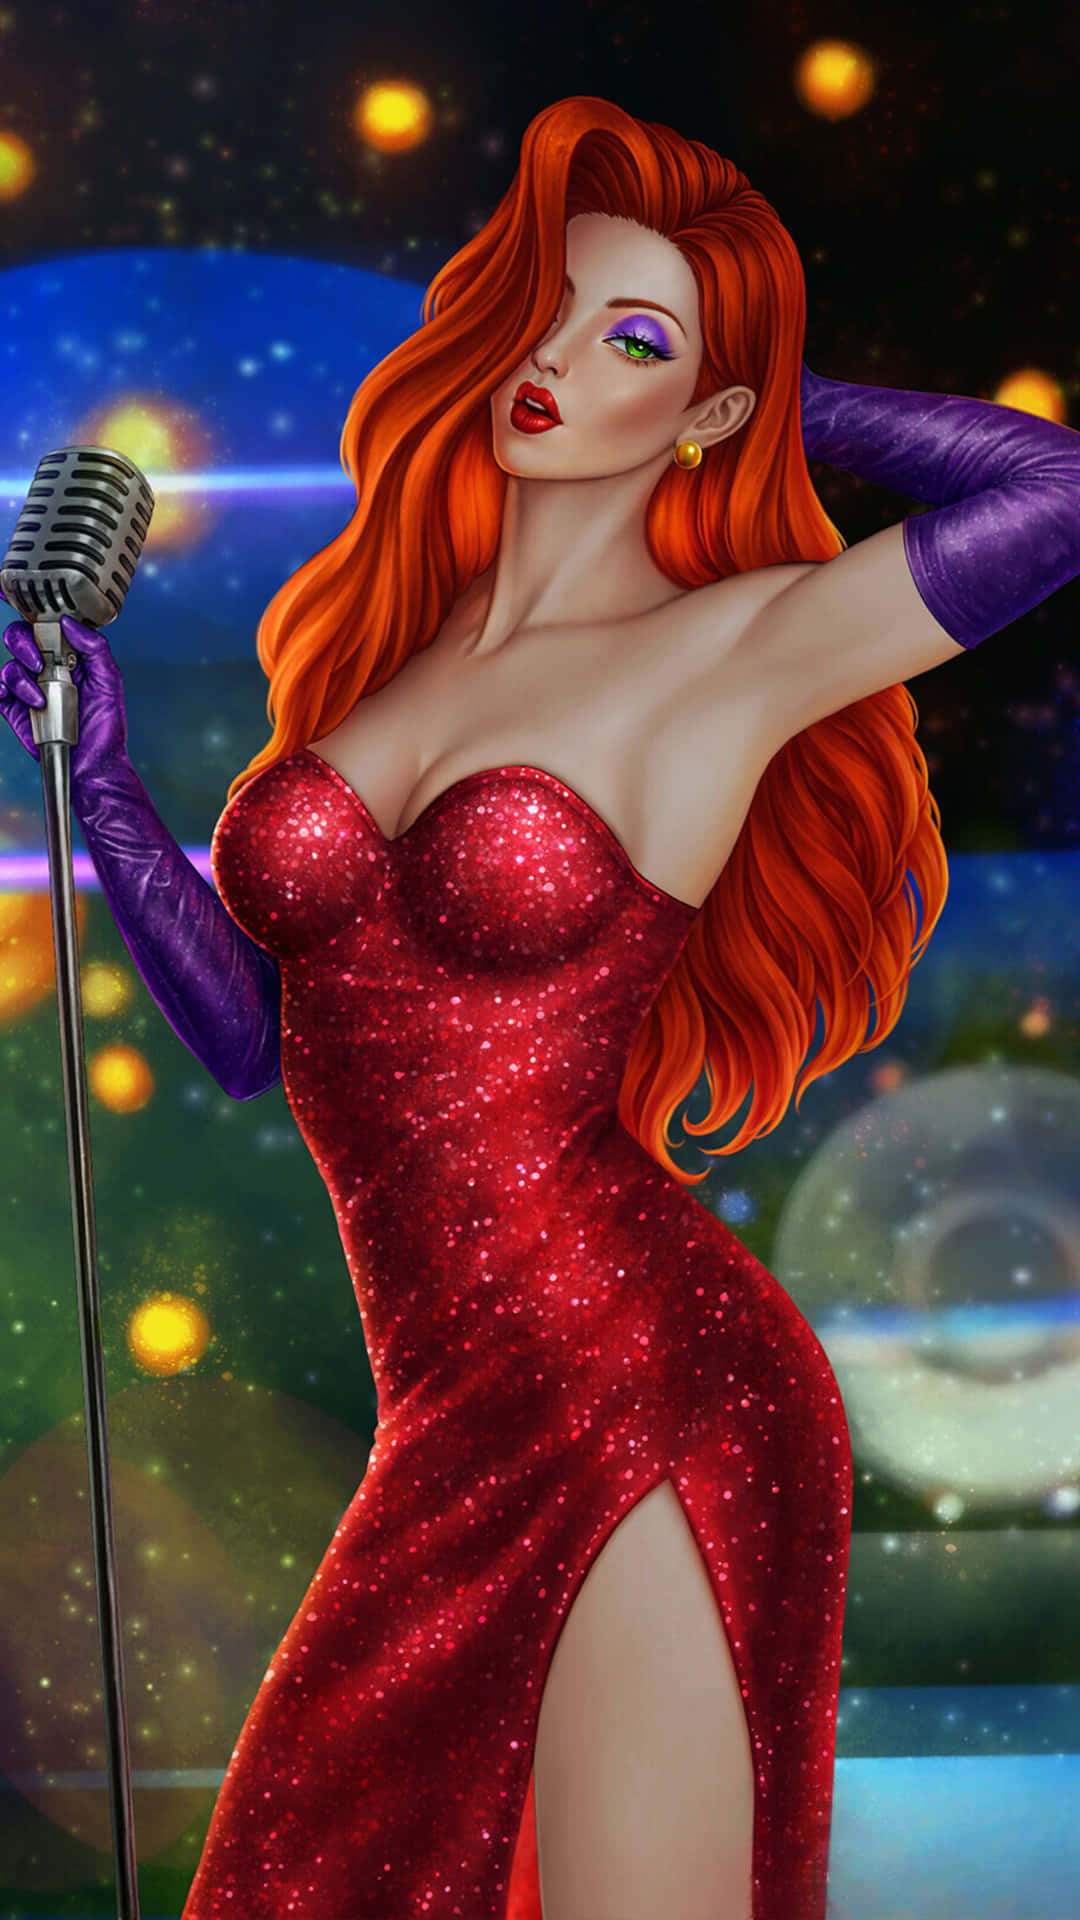 Jessica Rabbit Singing Under Starry Night.jpg Background